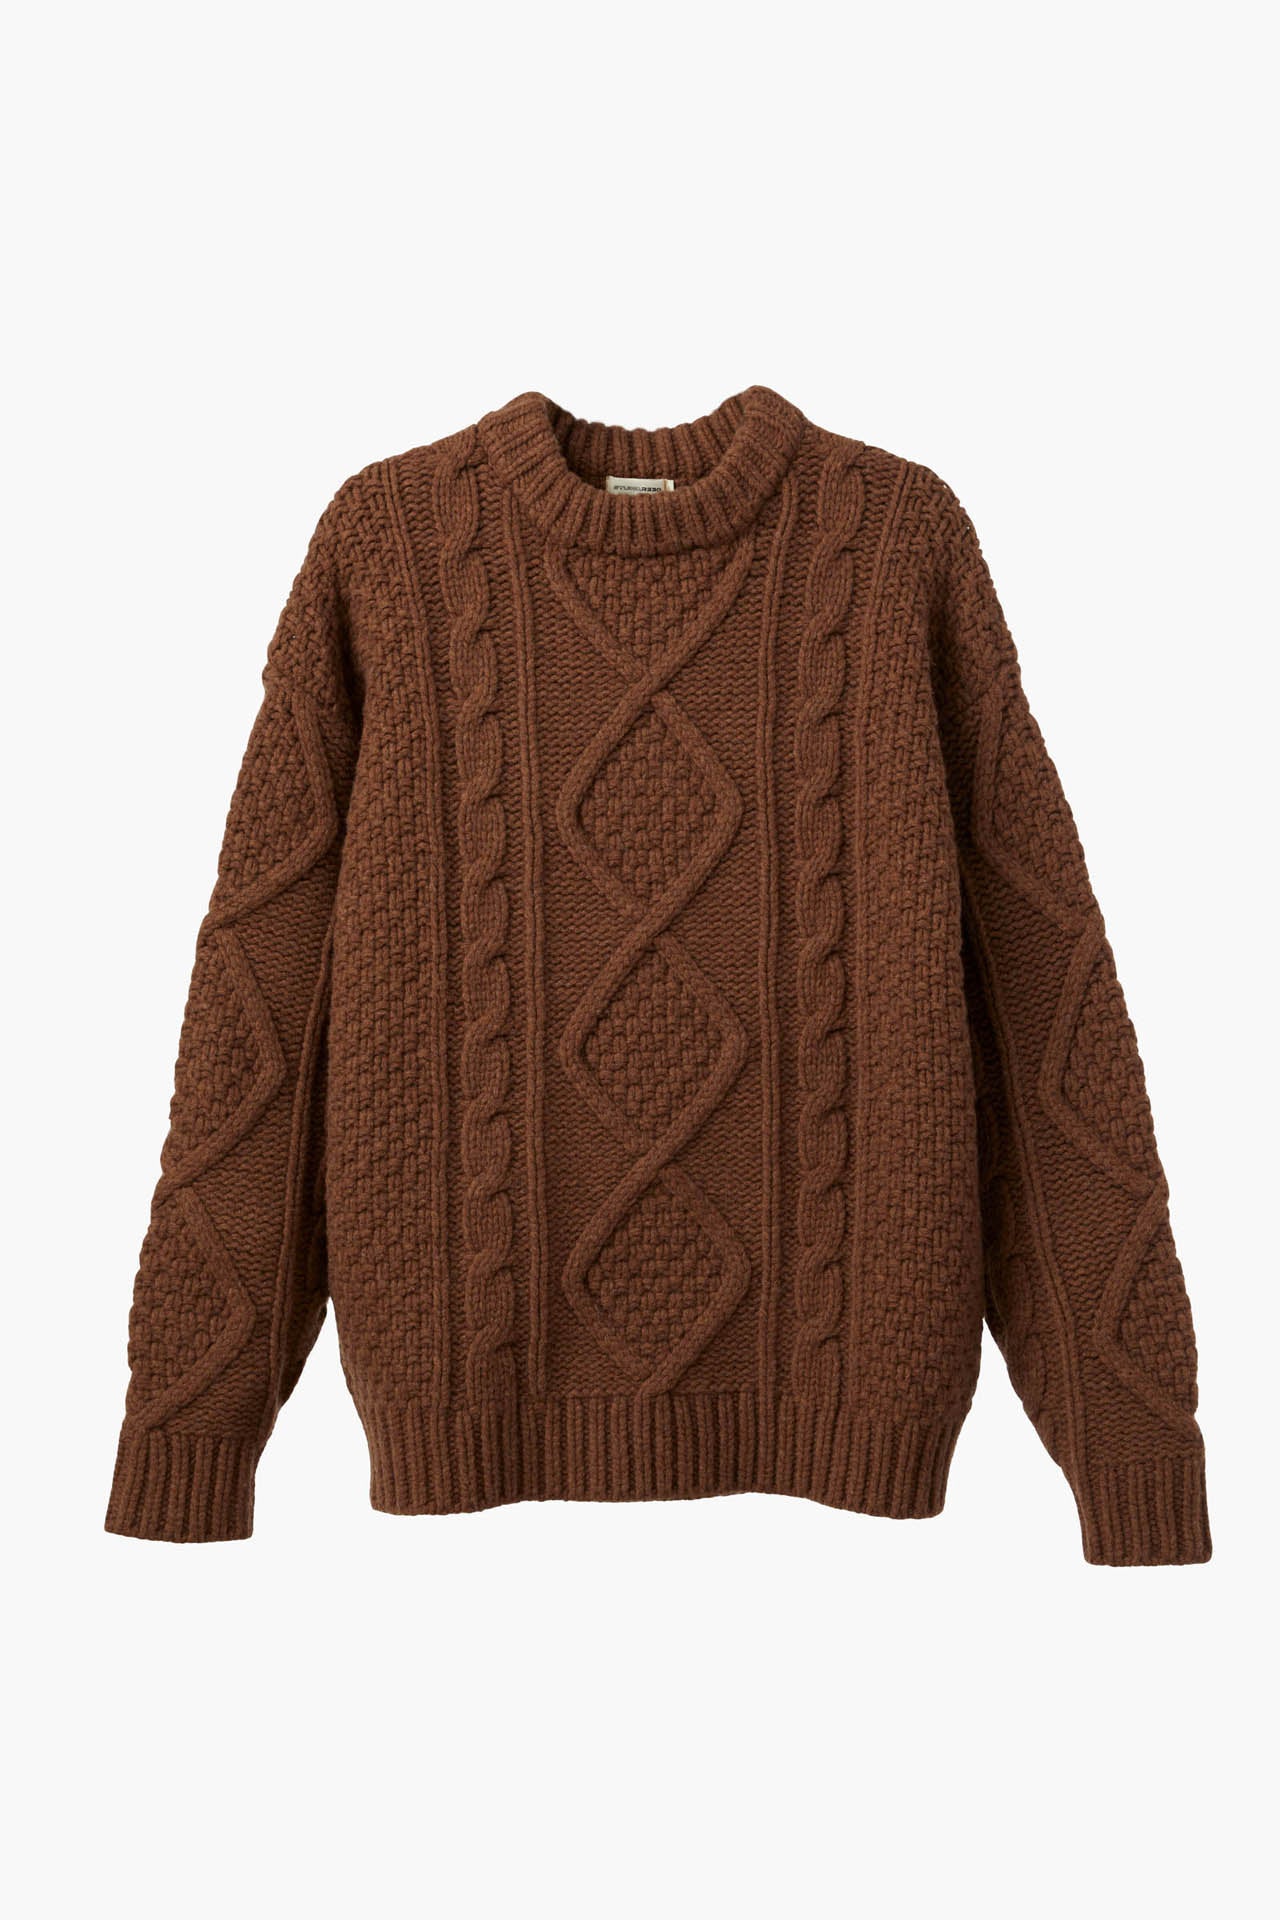 COOGI】Knit / Sweater 